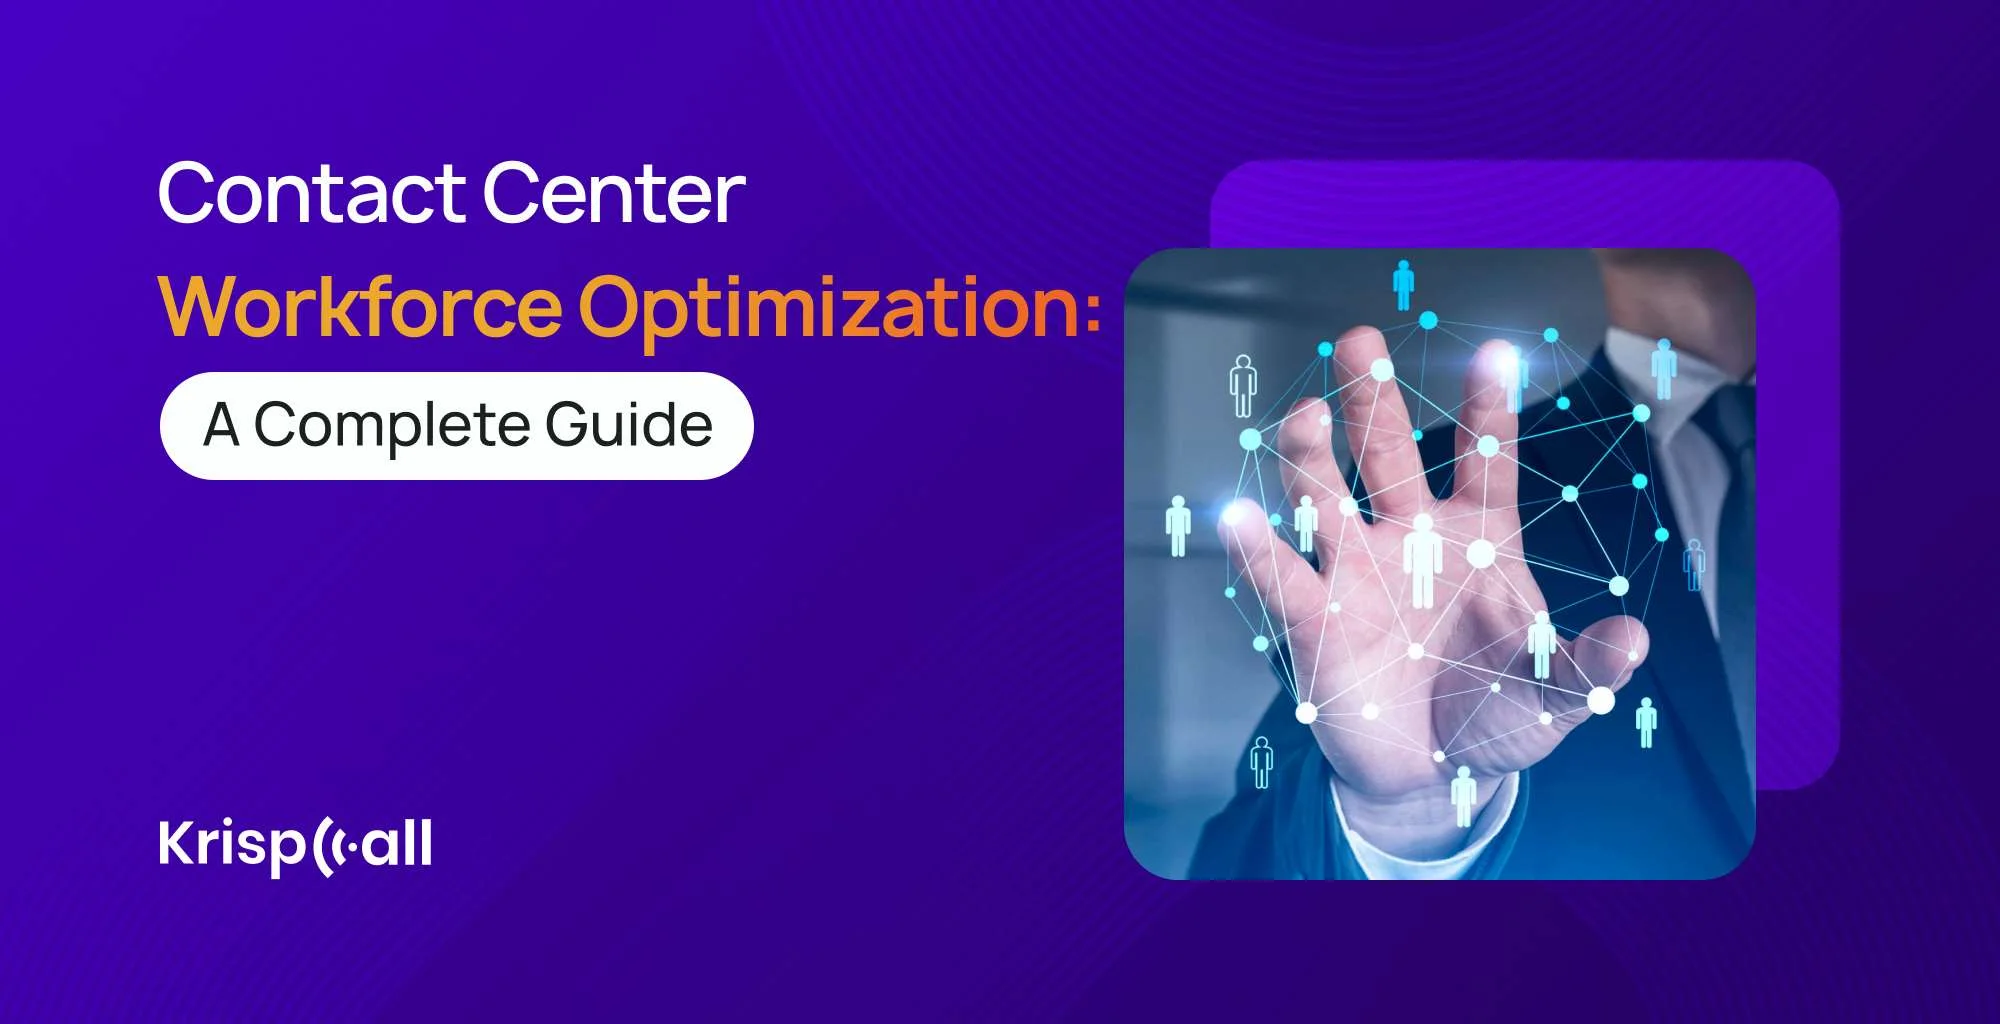 Contact Center Workforce Optimization